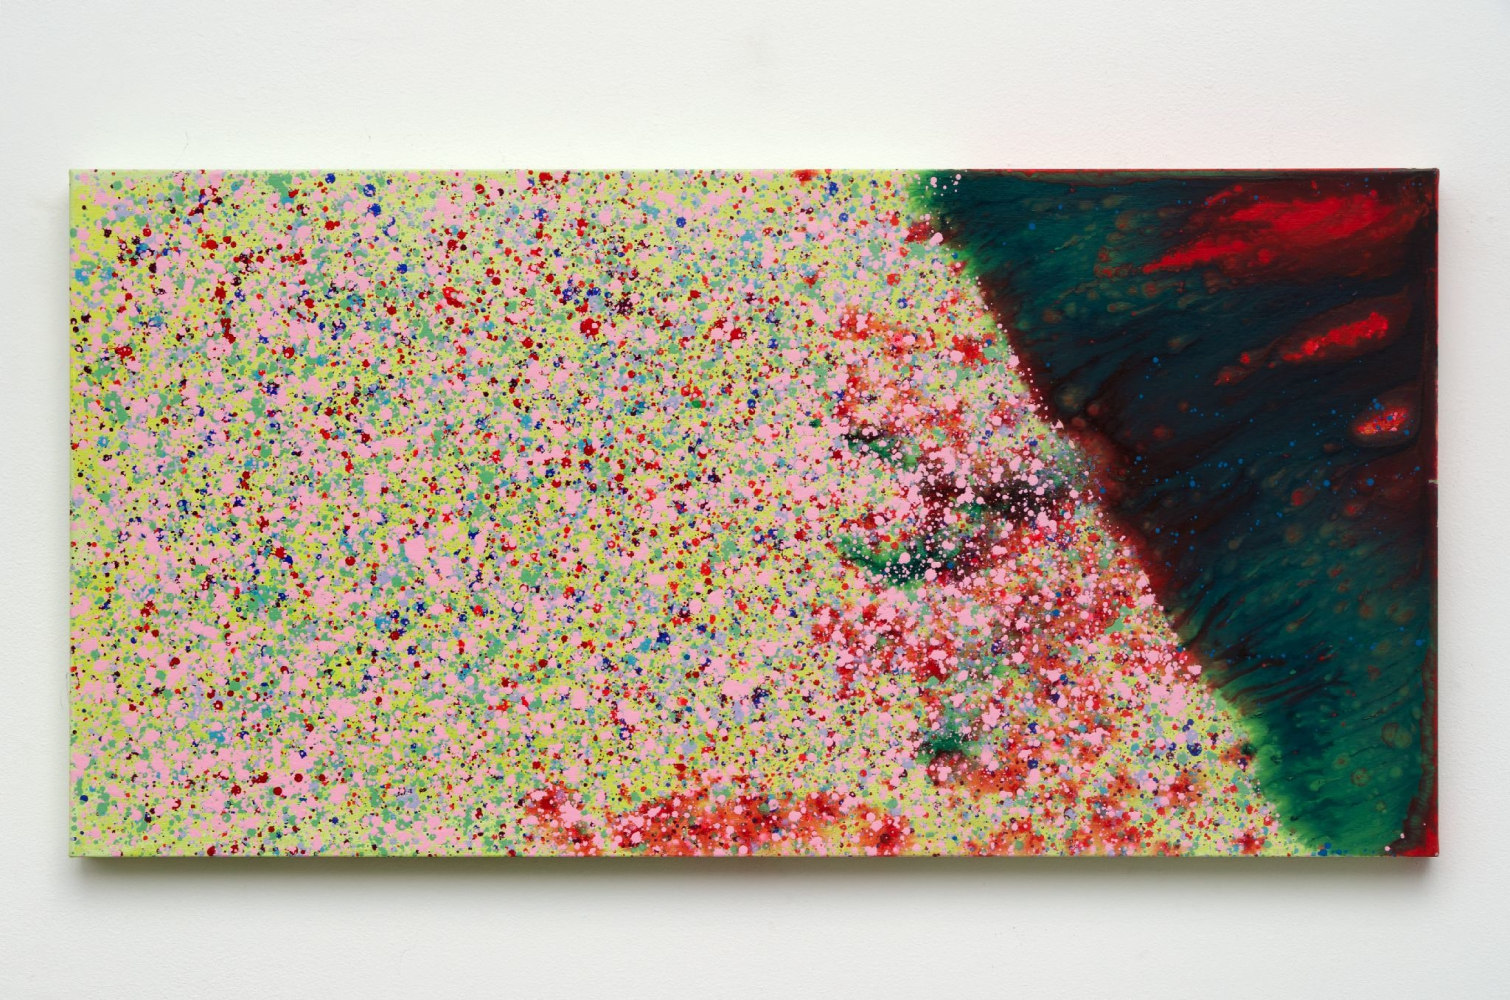 Matsumi Kanemitsu (1922-1992)
Untitled (C), c. 1992
acrylic on canvas
20 x 40 inches;&amp;nbsp;&amp;nbsp;50.8 x 101.6 centimeters
LSFA# 14004&amp;nbsp;